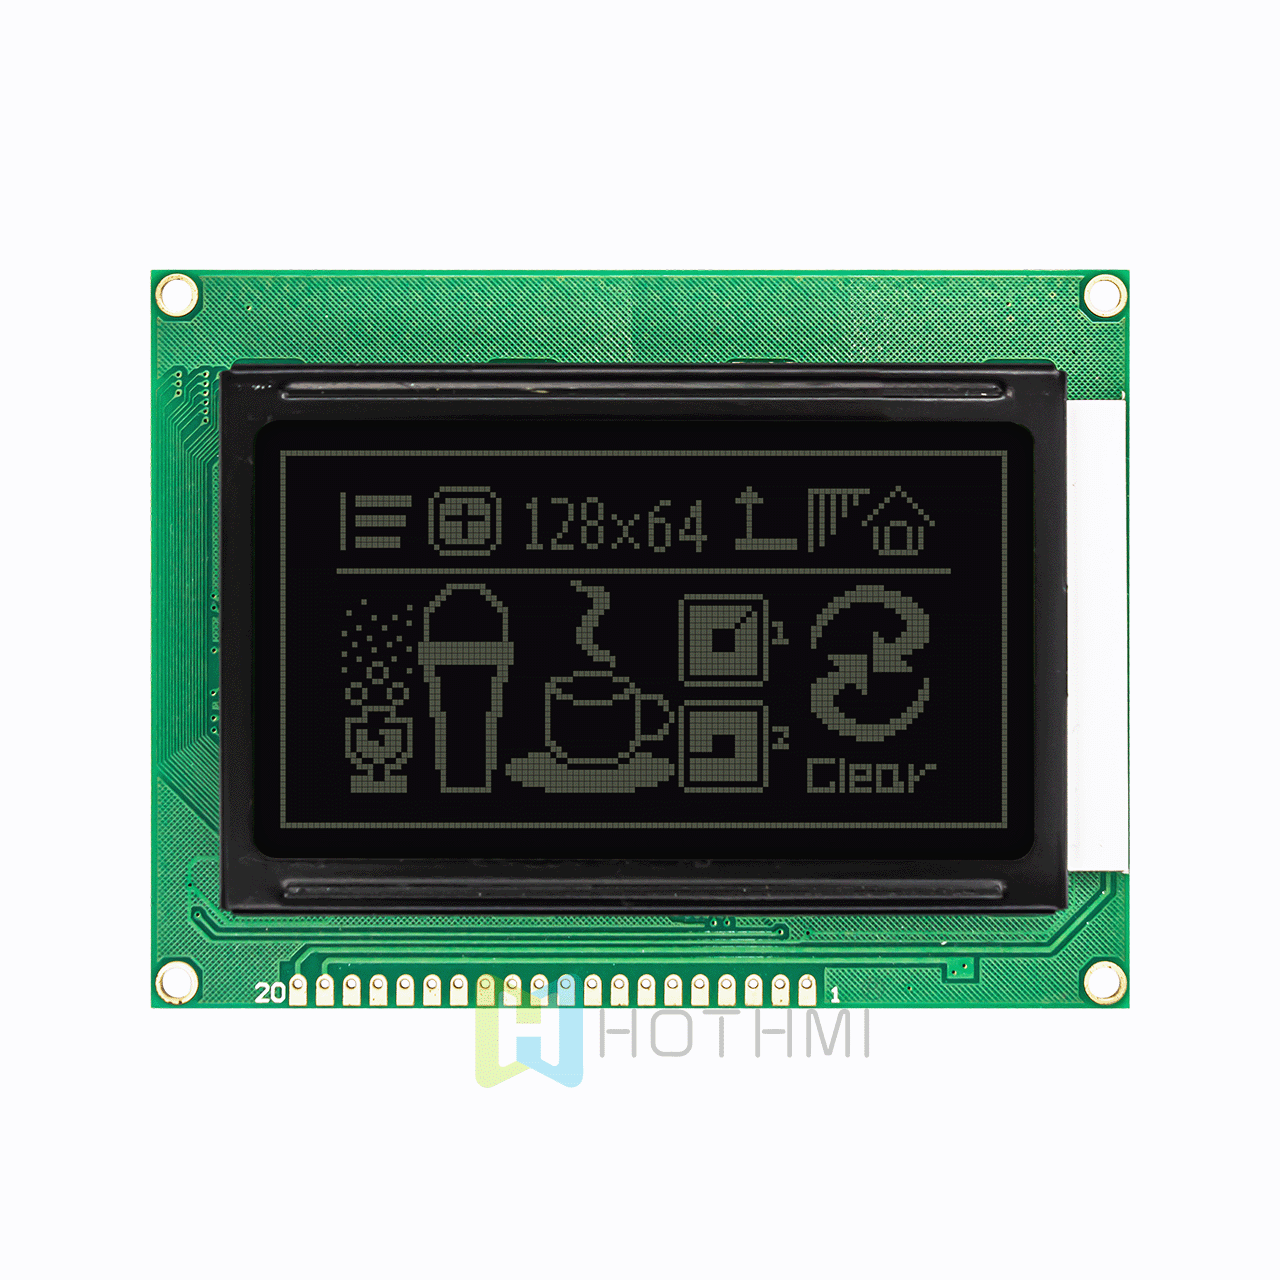 3.2" Black 128x64 Graphic LCD Display Module, DFSTN Negative ，ST7920, MCU for Arduino